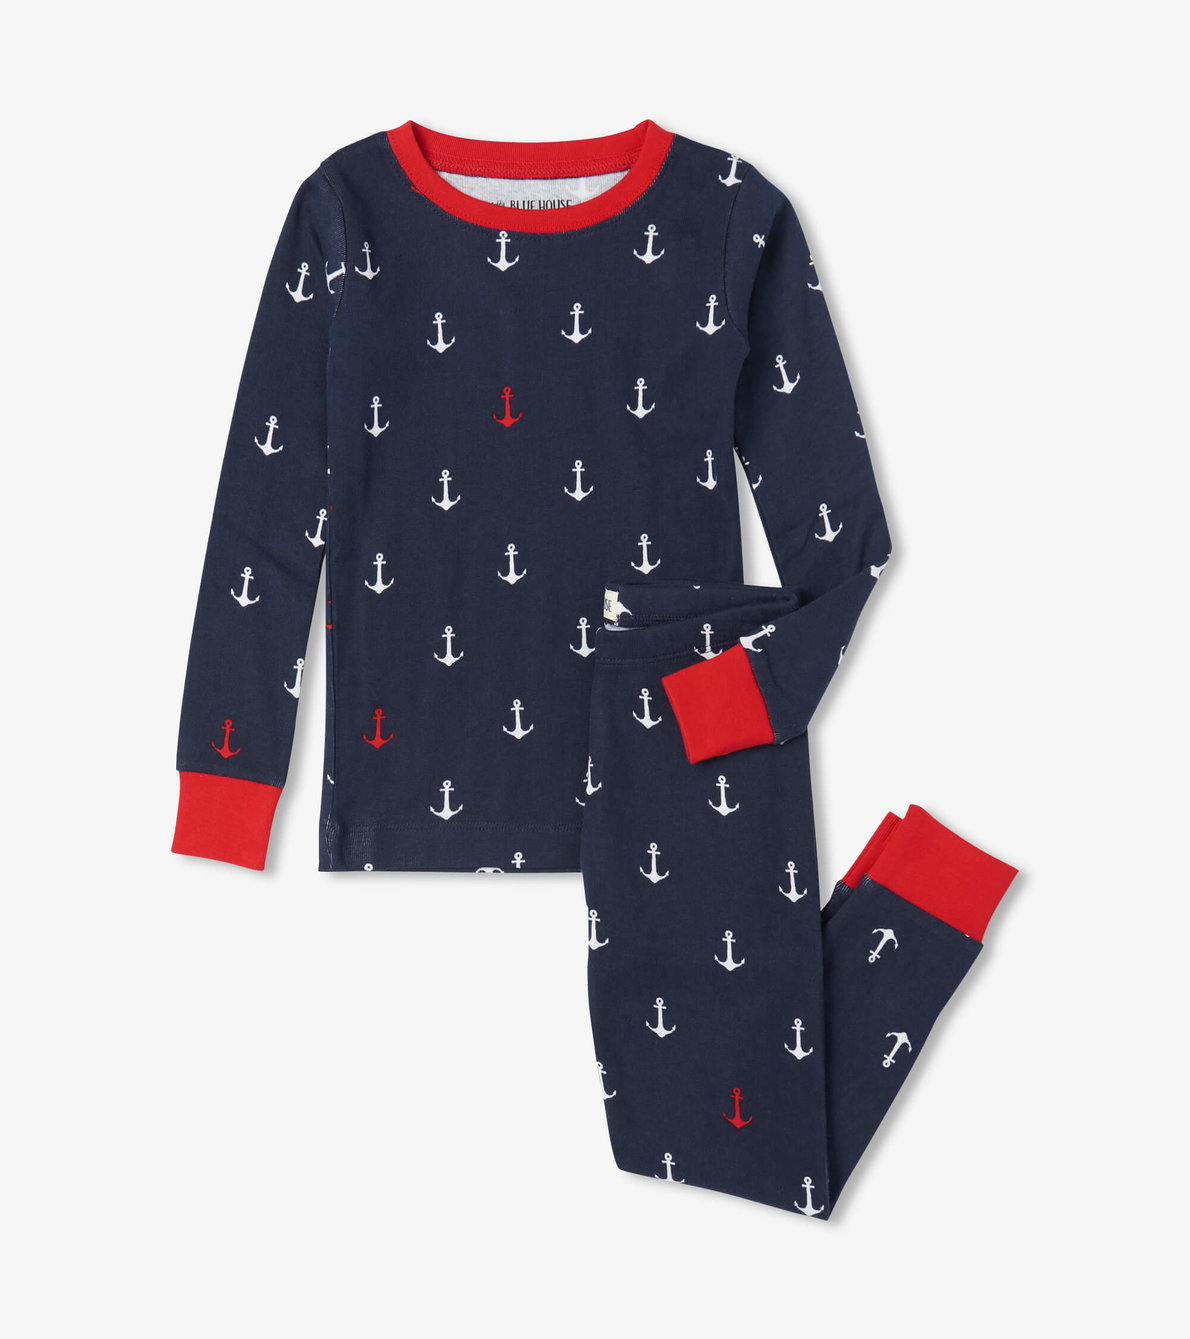 View larger image of Nautical Anchors Kids Pajama Set